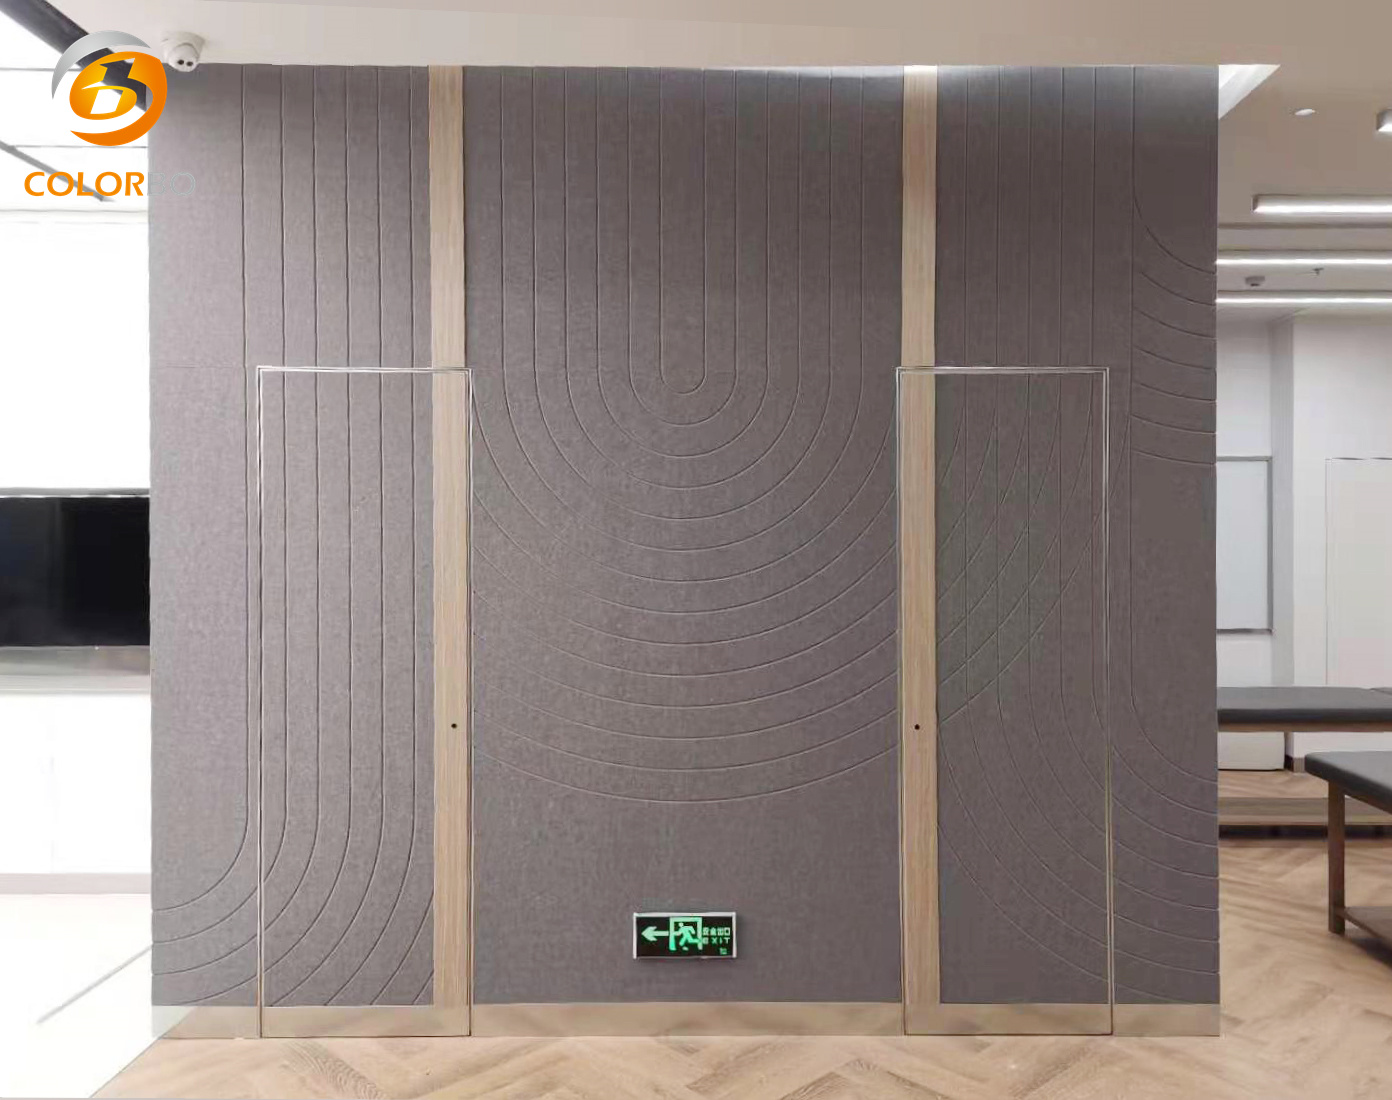 PET-DK-10 Suspended Acoustic Panel Baffles Studio Decorative Polyester Fiber Panels